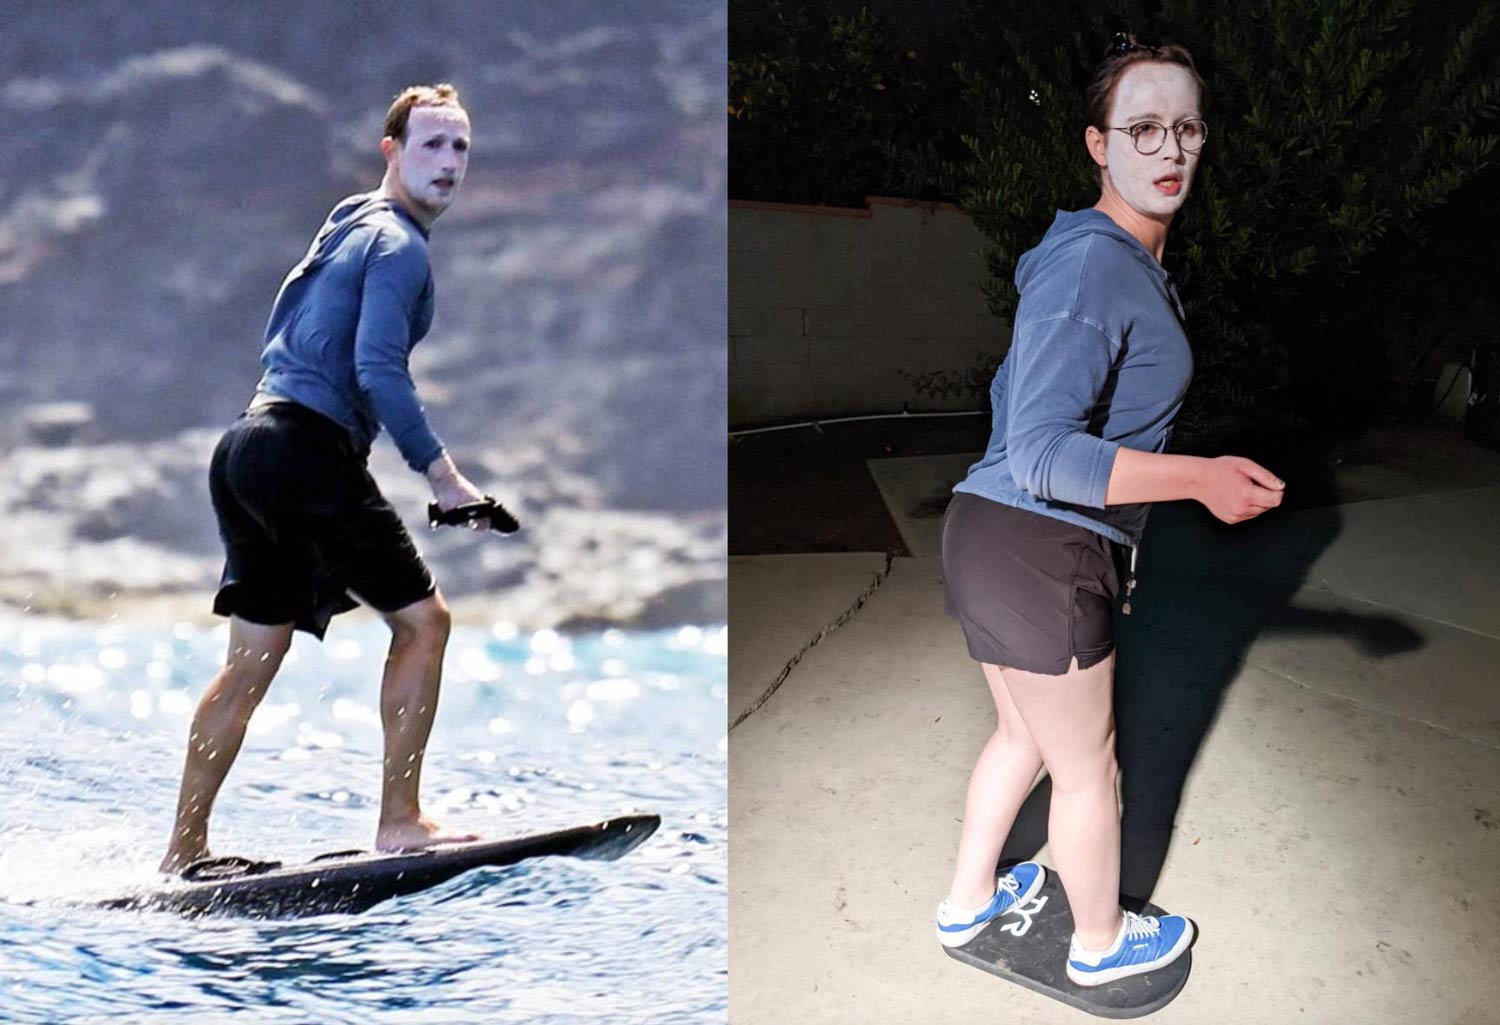 Someone went as Sunscreened Zuckerberg for Halloween